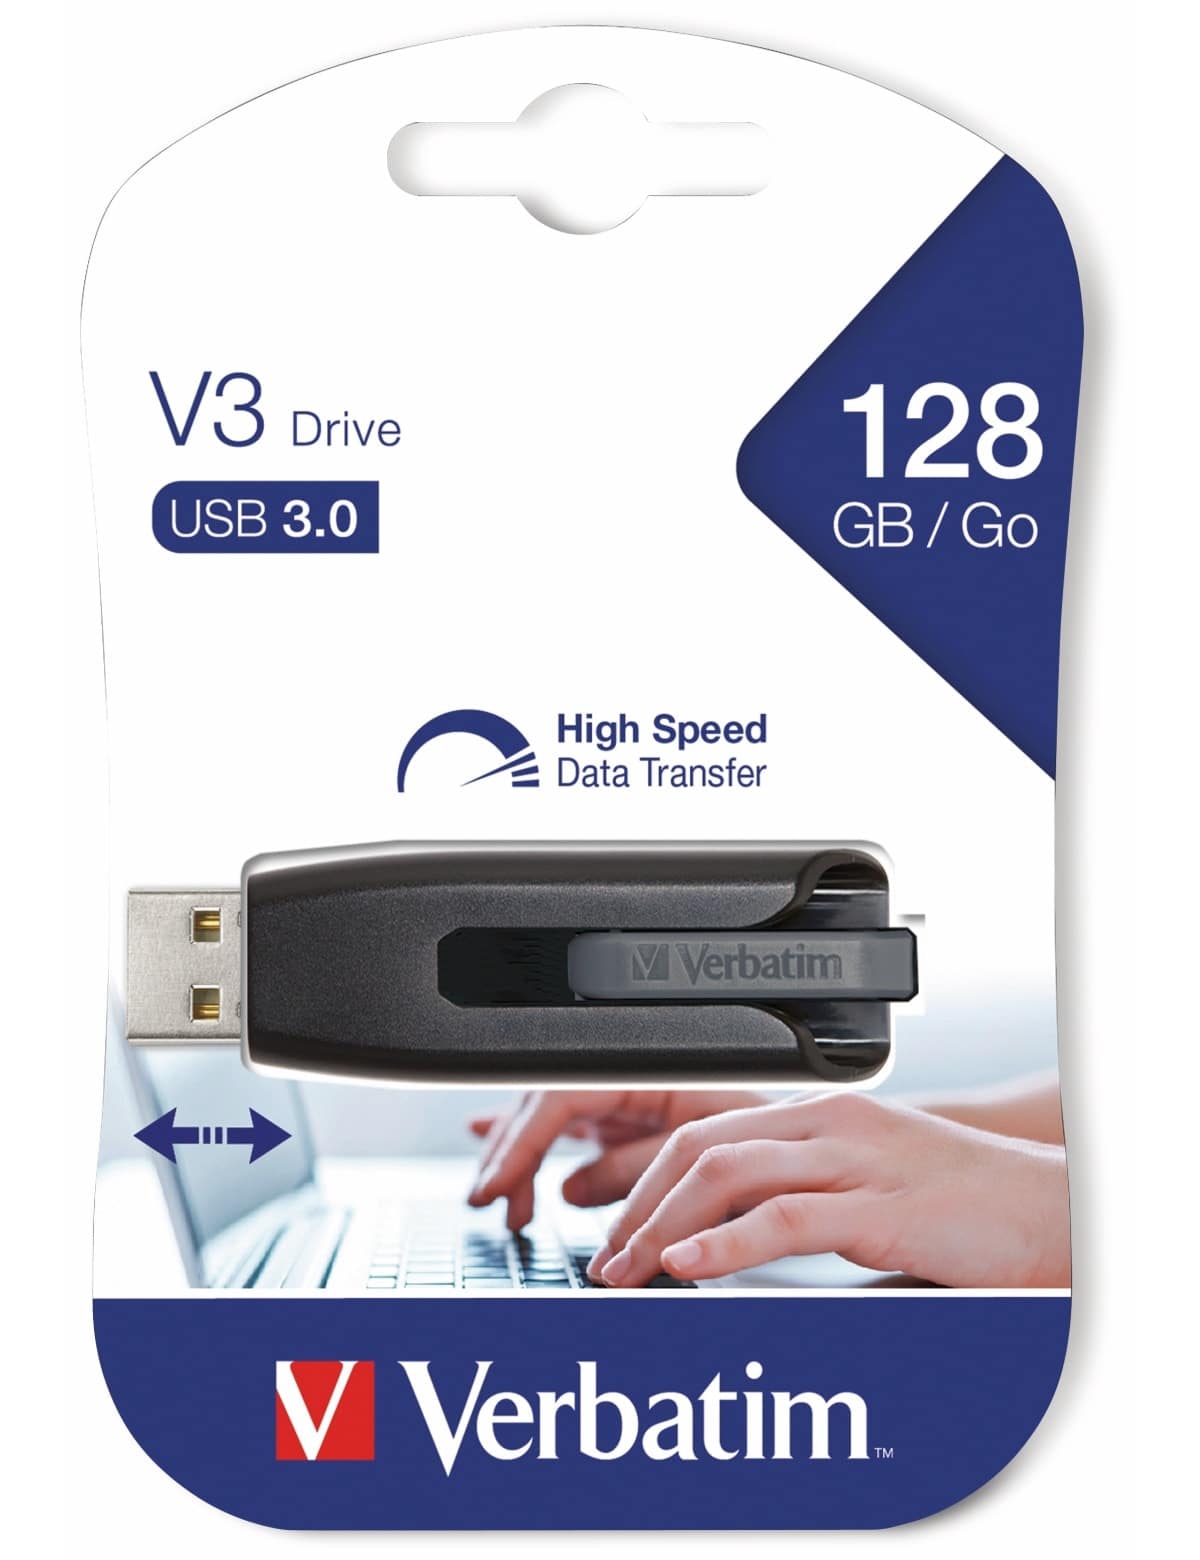 VERBATIM USB 3.0 Speicherstick V3 Store n Go, 128 GB